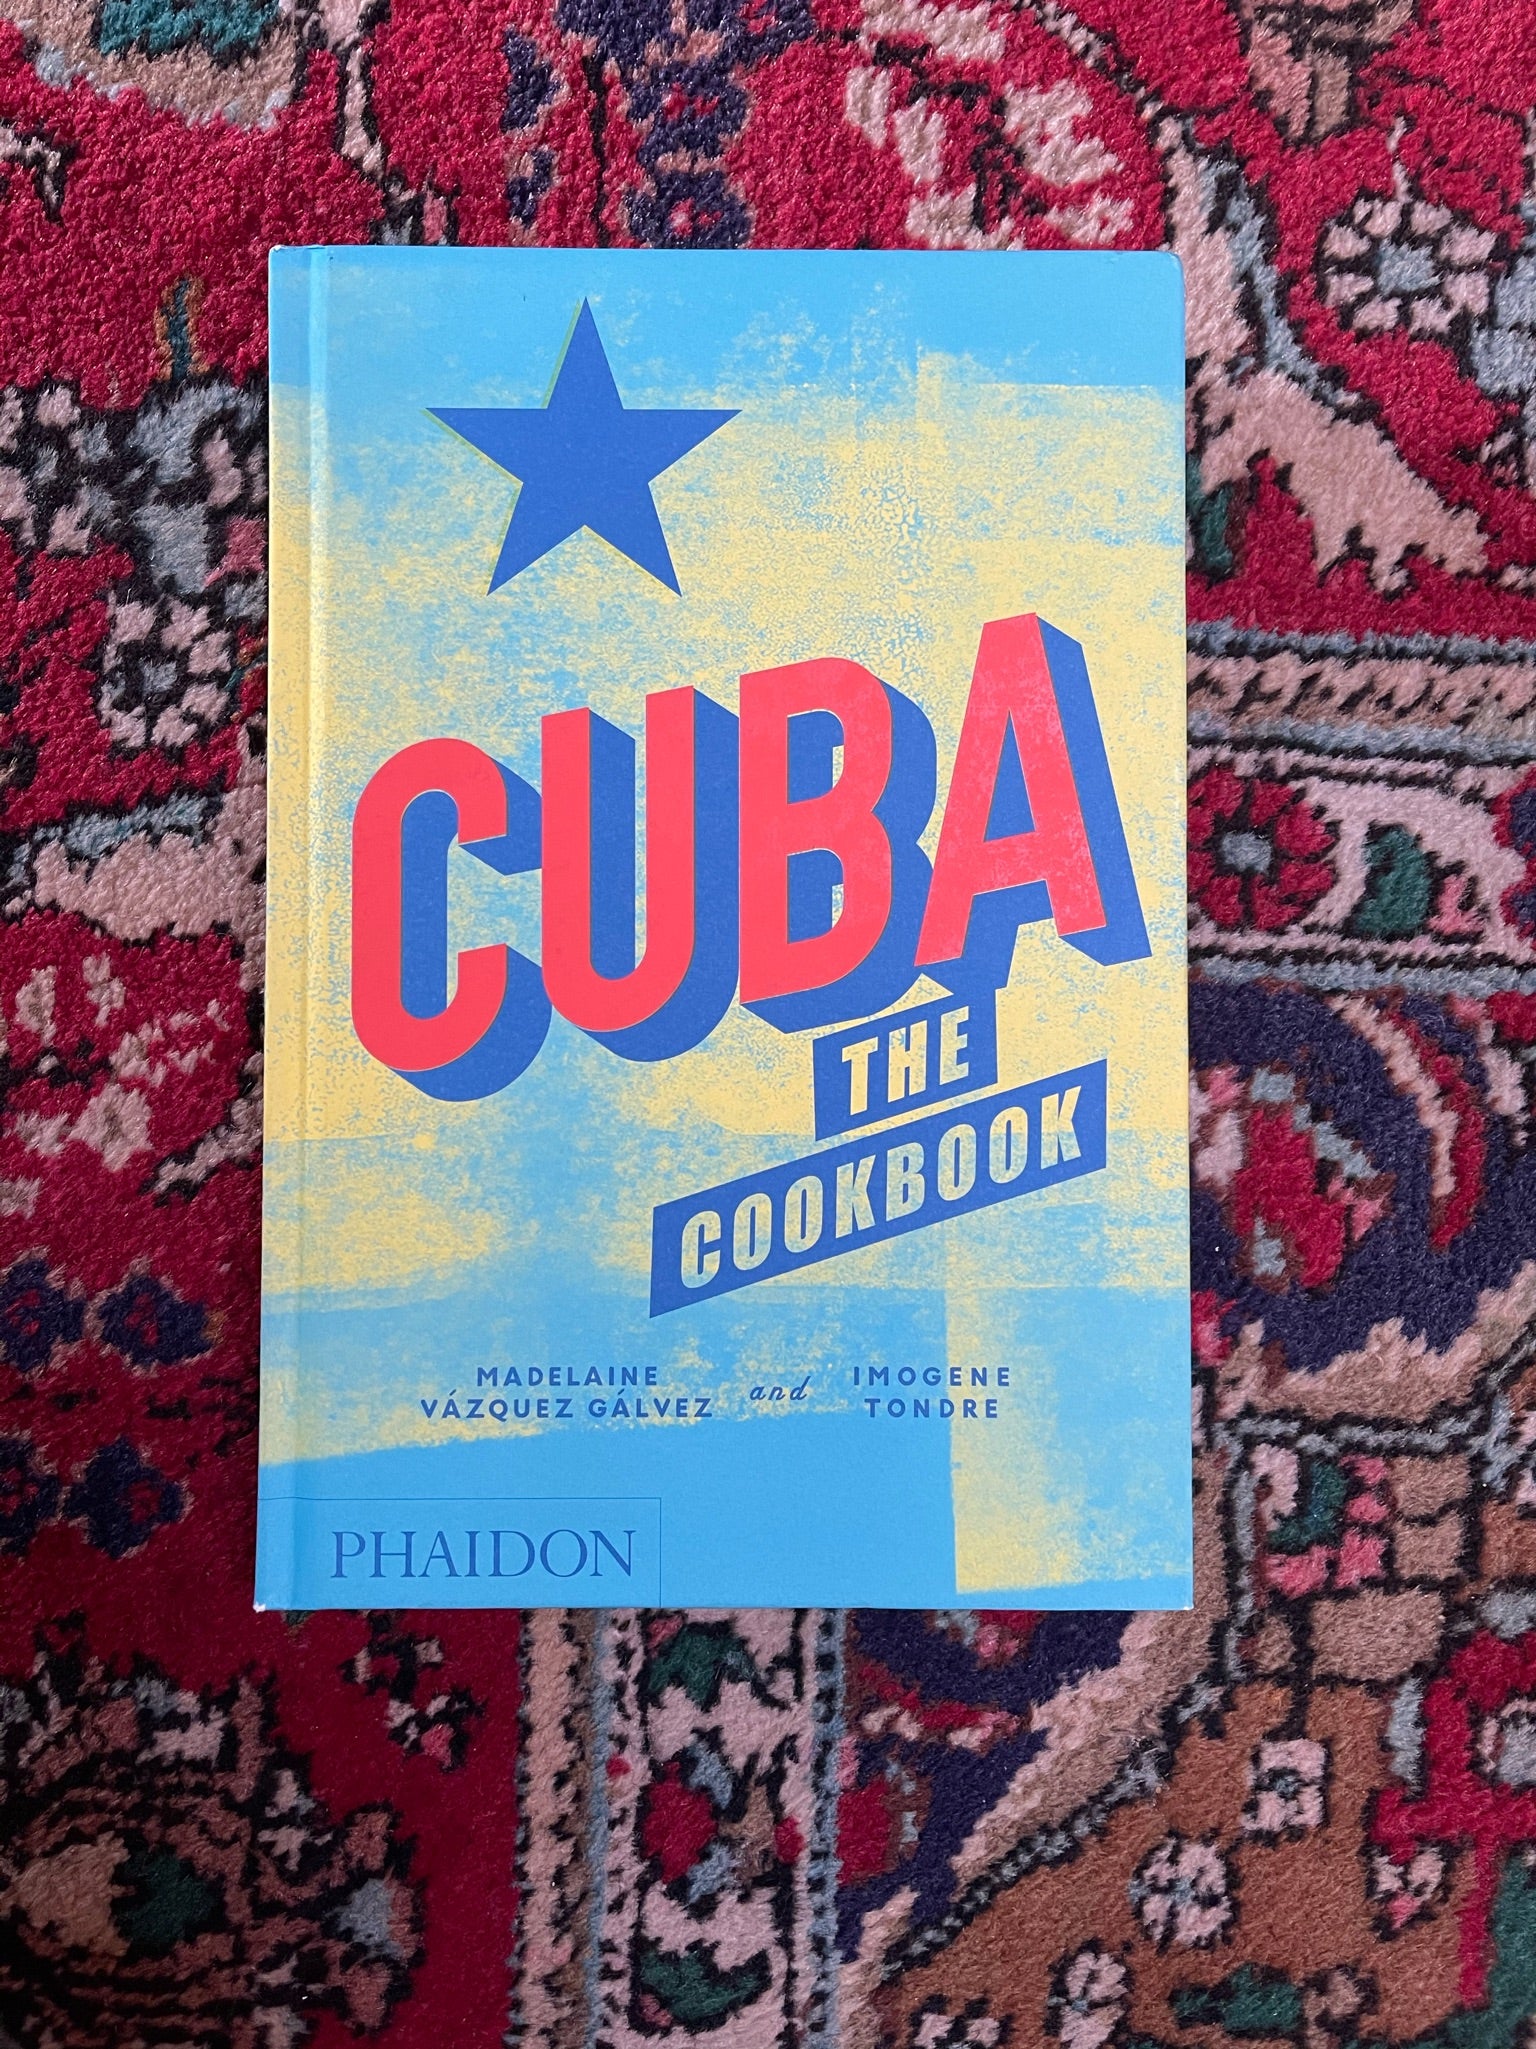 Cuba The Cookbook by Madelaine Vázquez Gálvez, Imogene Tondre